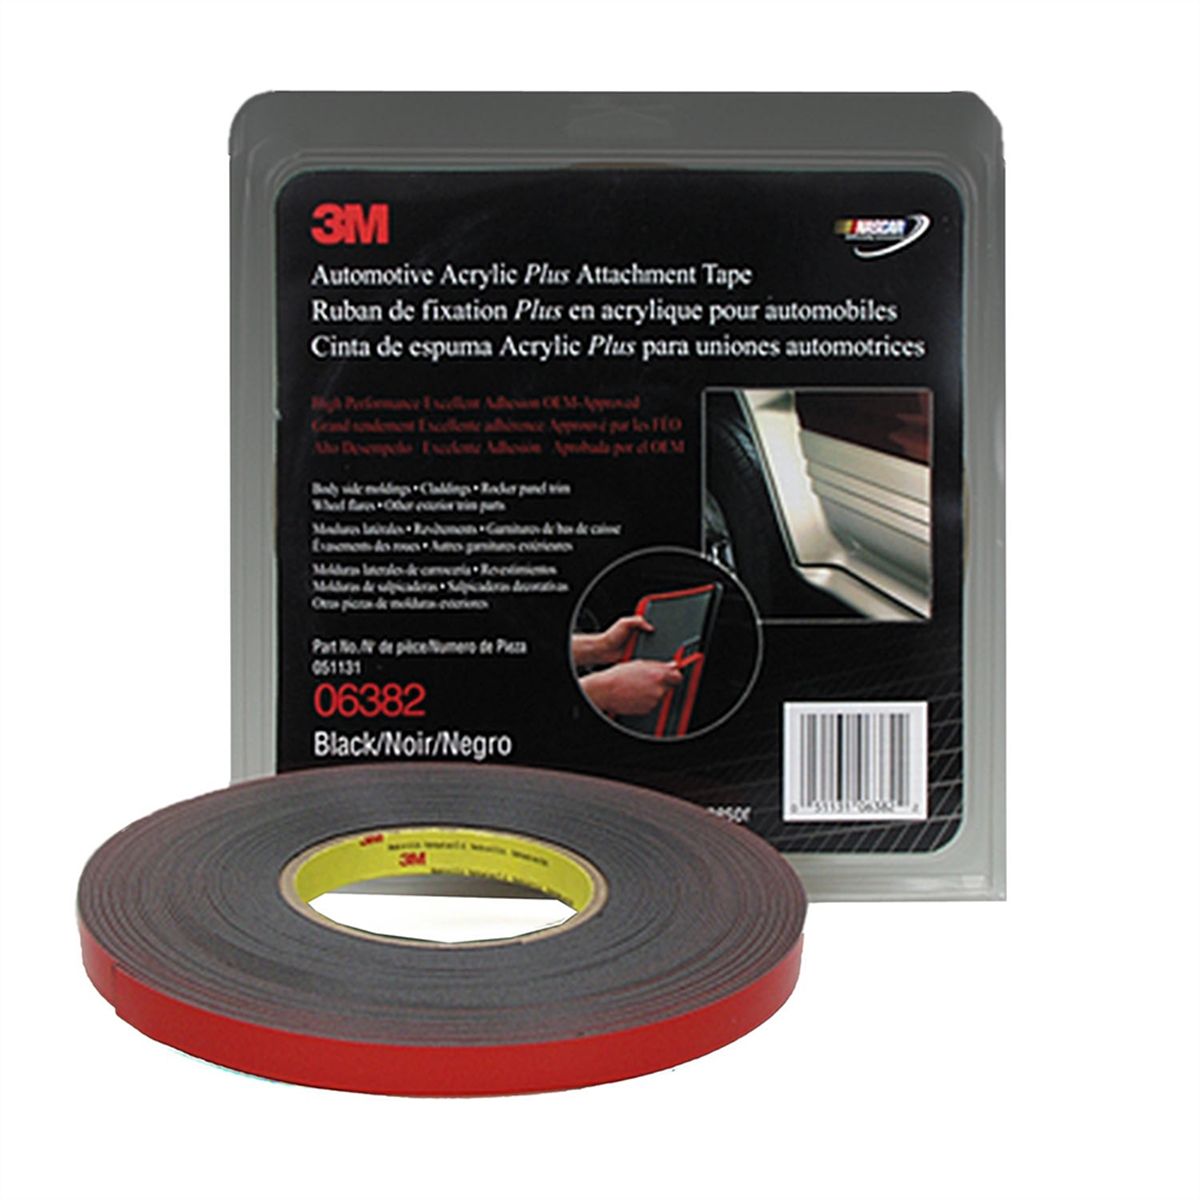 Automotive Acrylic Plus Attachment Tape, 1/2 Inch X 20 Yards